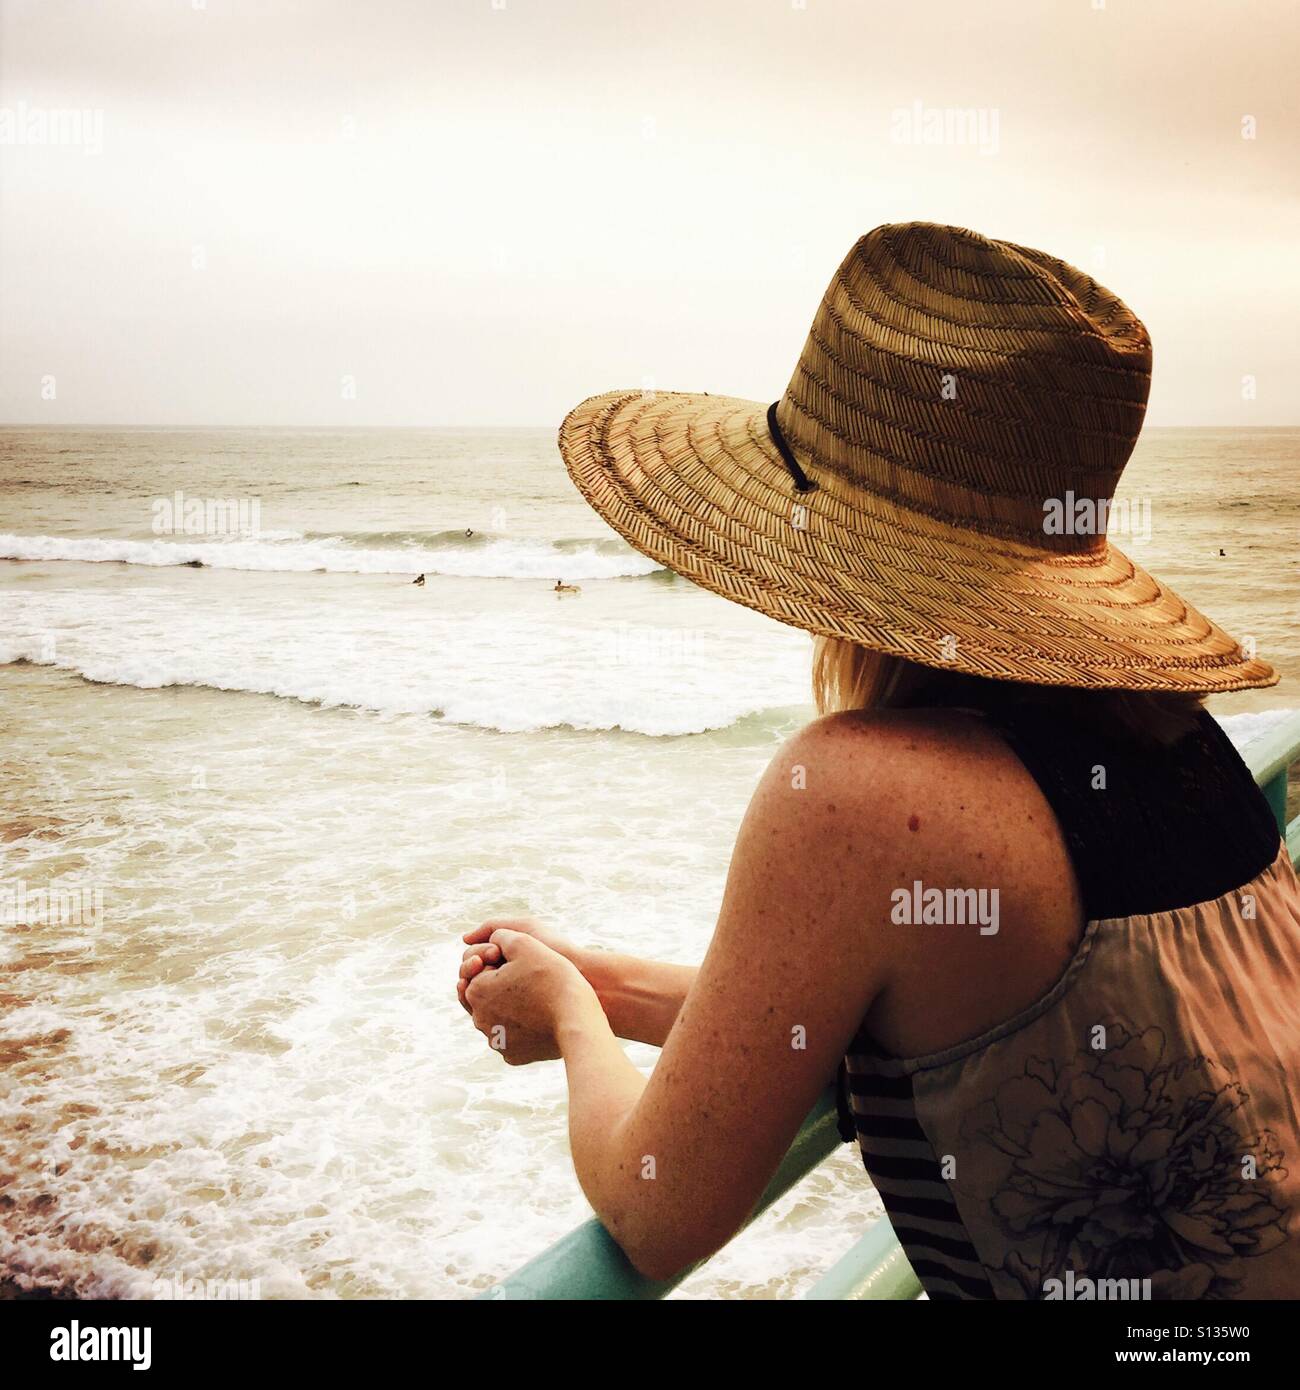 A young women in a hat looks out to the ocean on the Manhattan Beach pier. Manhattan Beach, California USA. Stock Photo